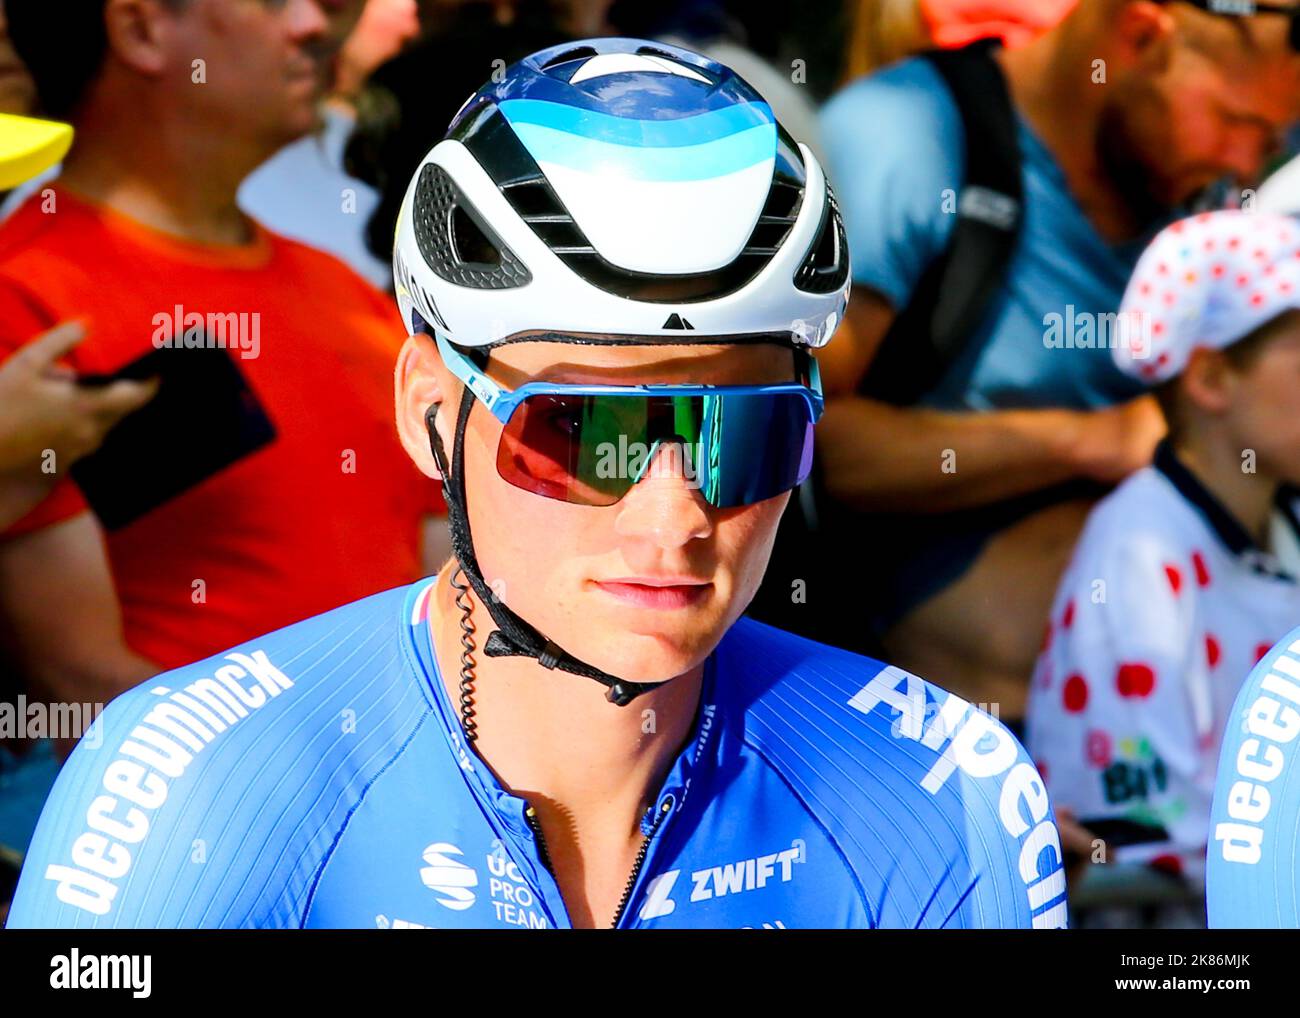 Mathieu VAN DER POEL beim Start der Tour De France, Stage 5, Frankreich, 6.. Juli 2022, Credit:Chris Wallis/Goding Images/PA Images Stockfoto